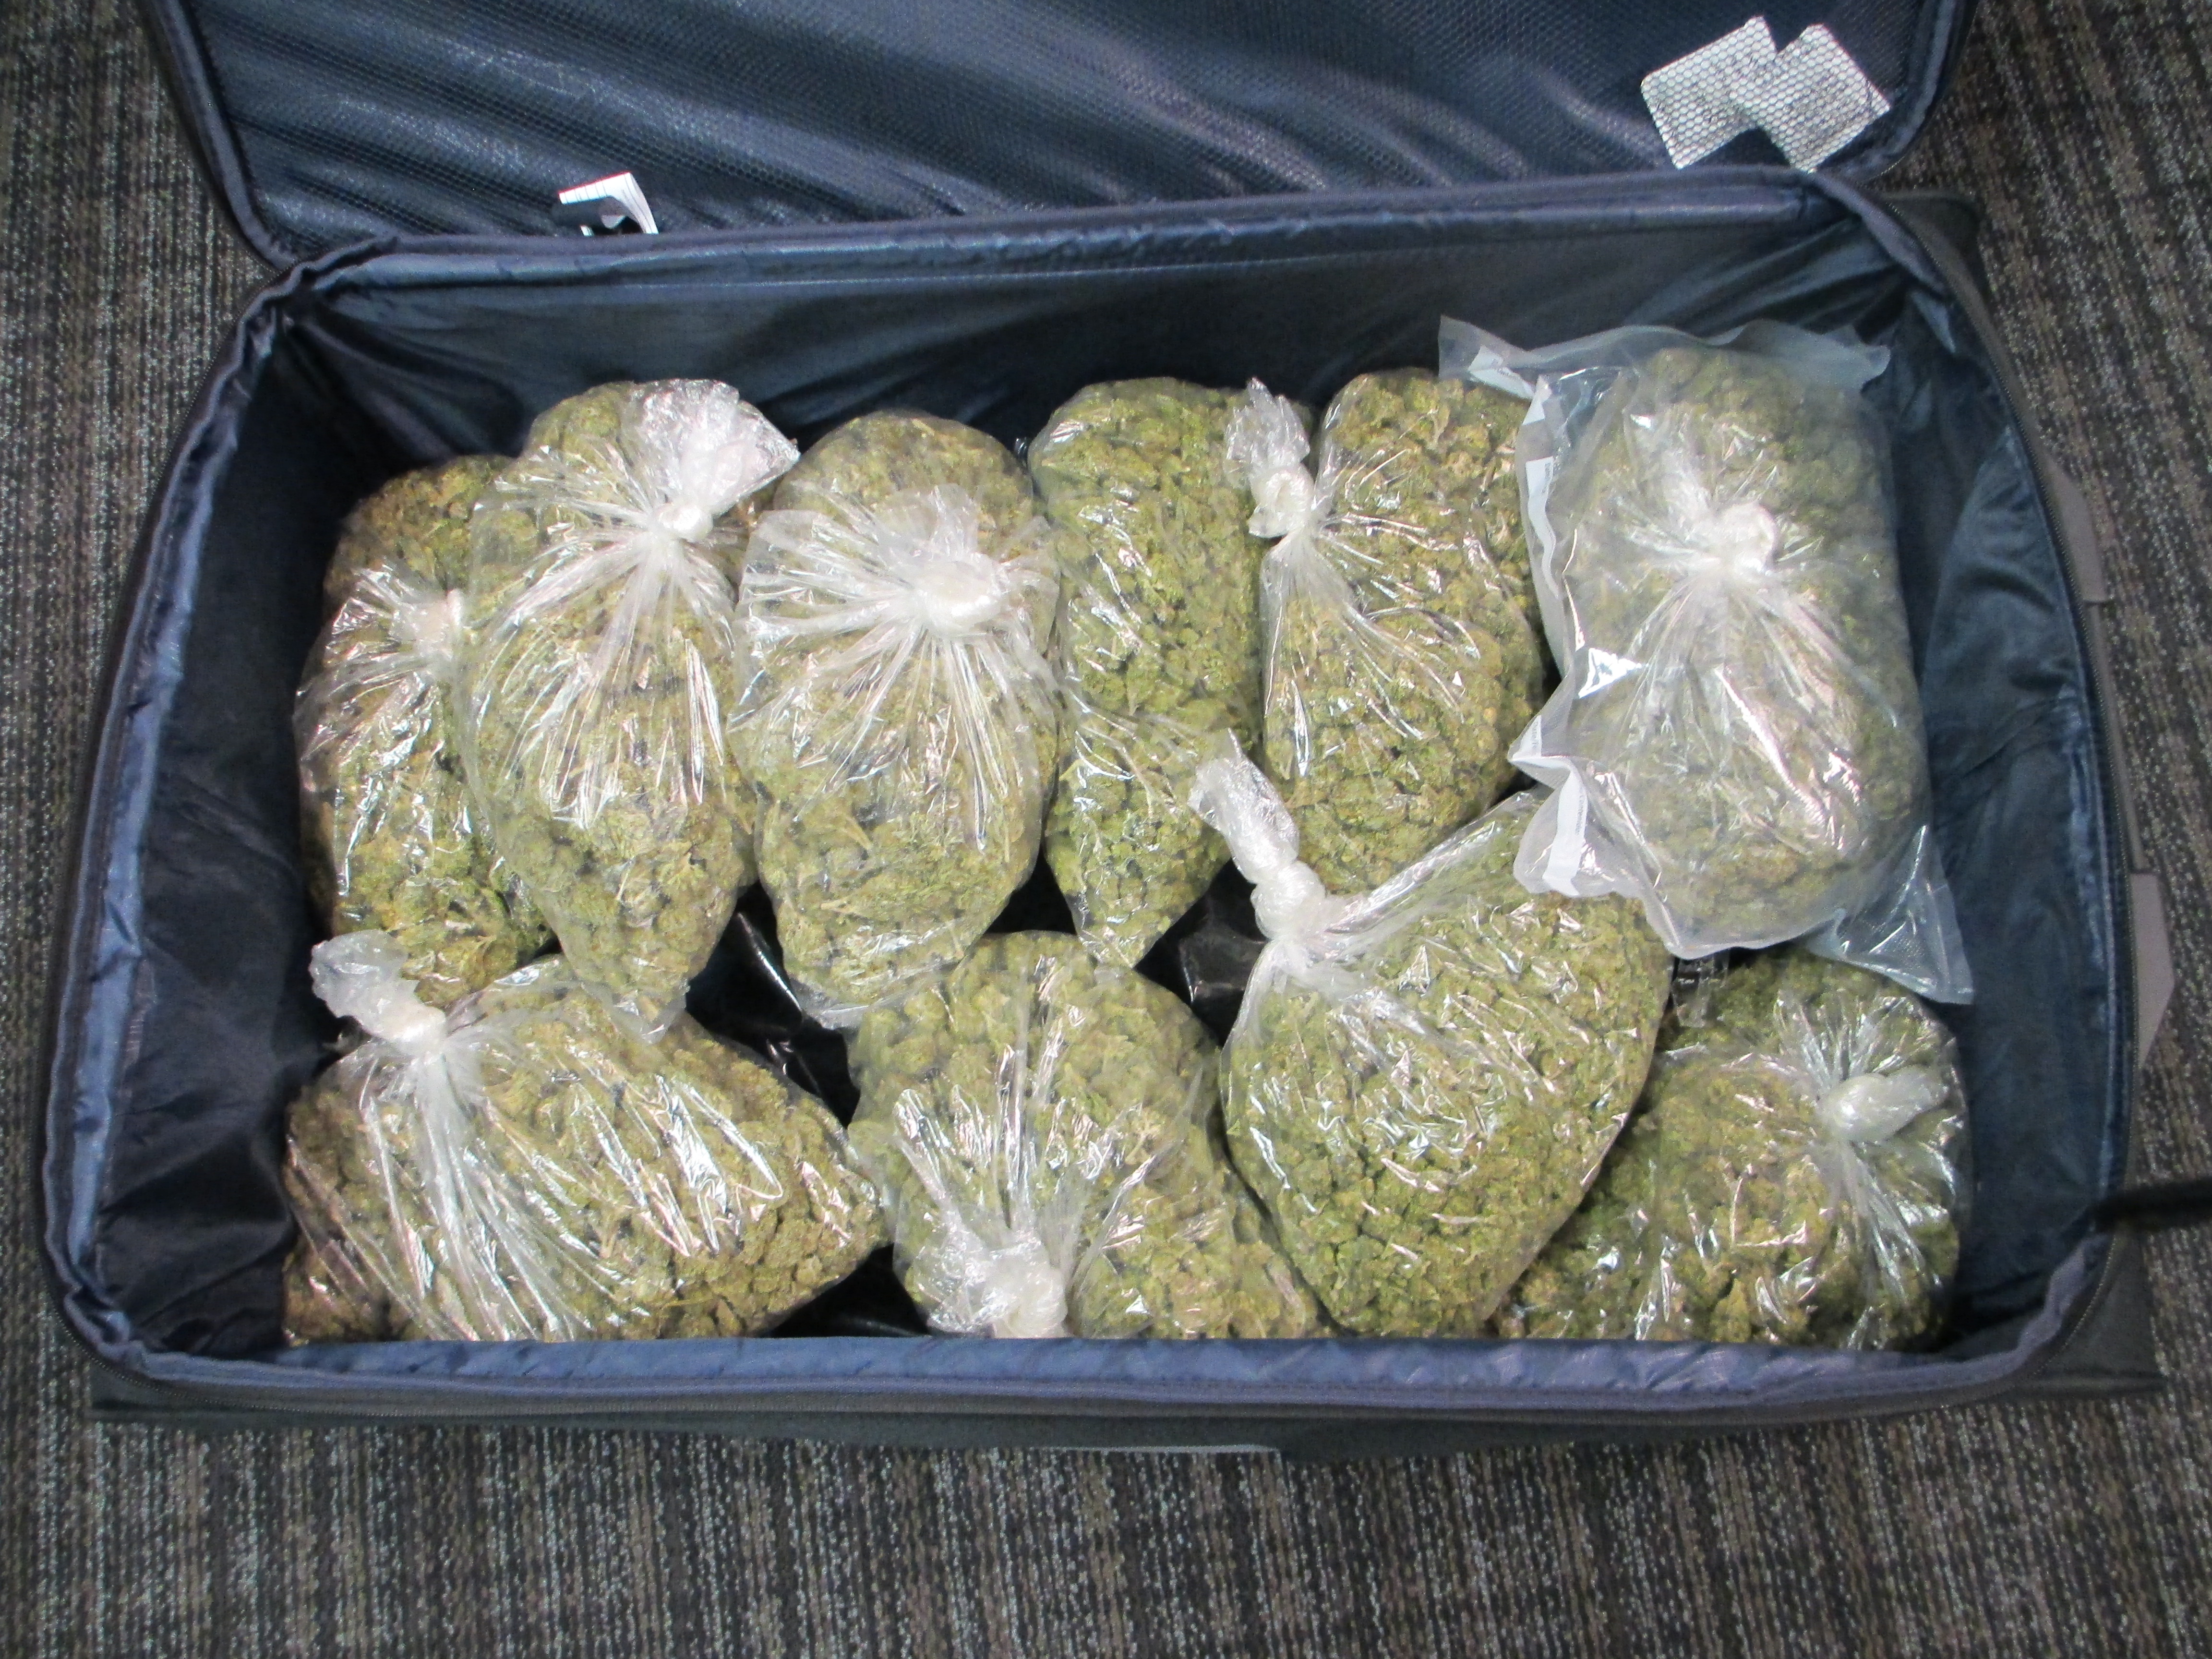 California man arrested with 10 pounds of marijuana in Estero.